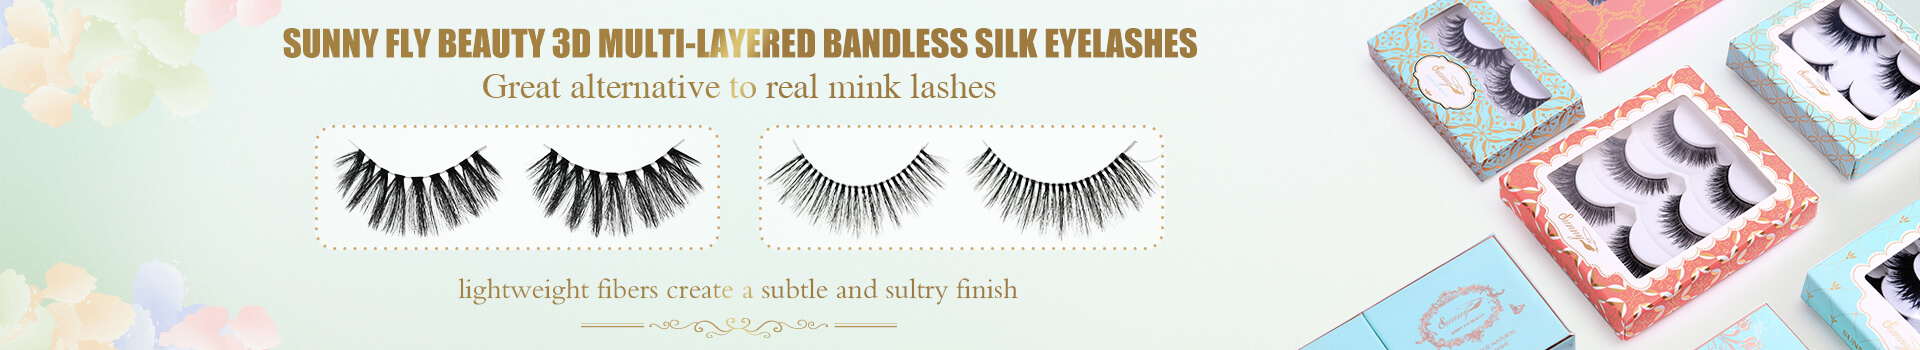 3D Multi-Layered Bandless Silk Eyelas TA03